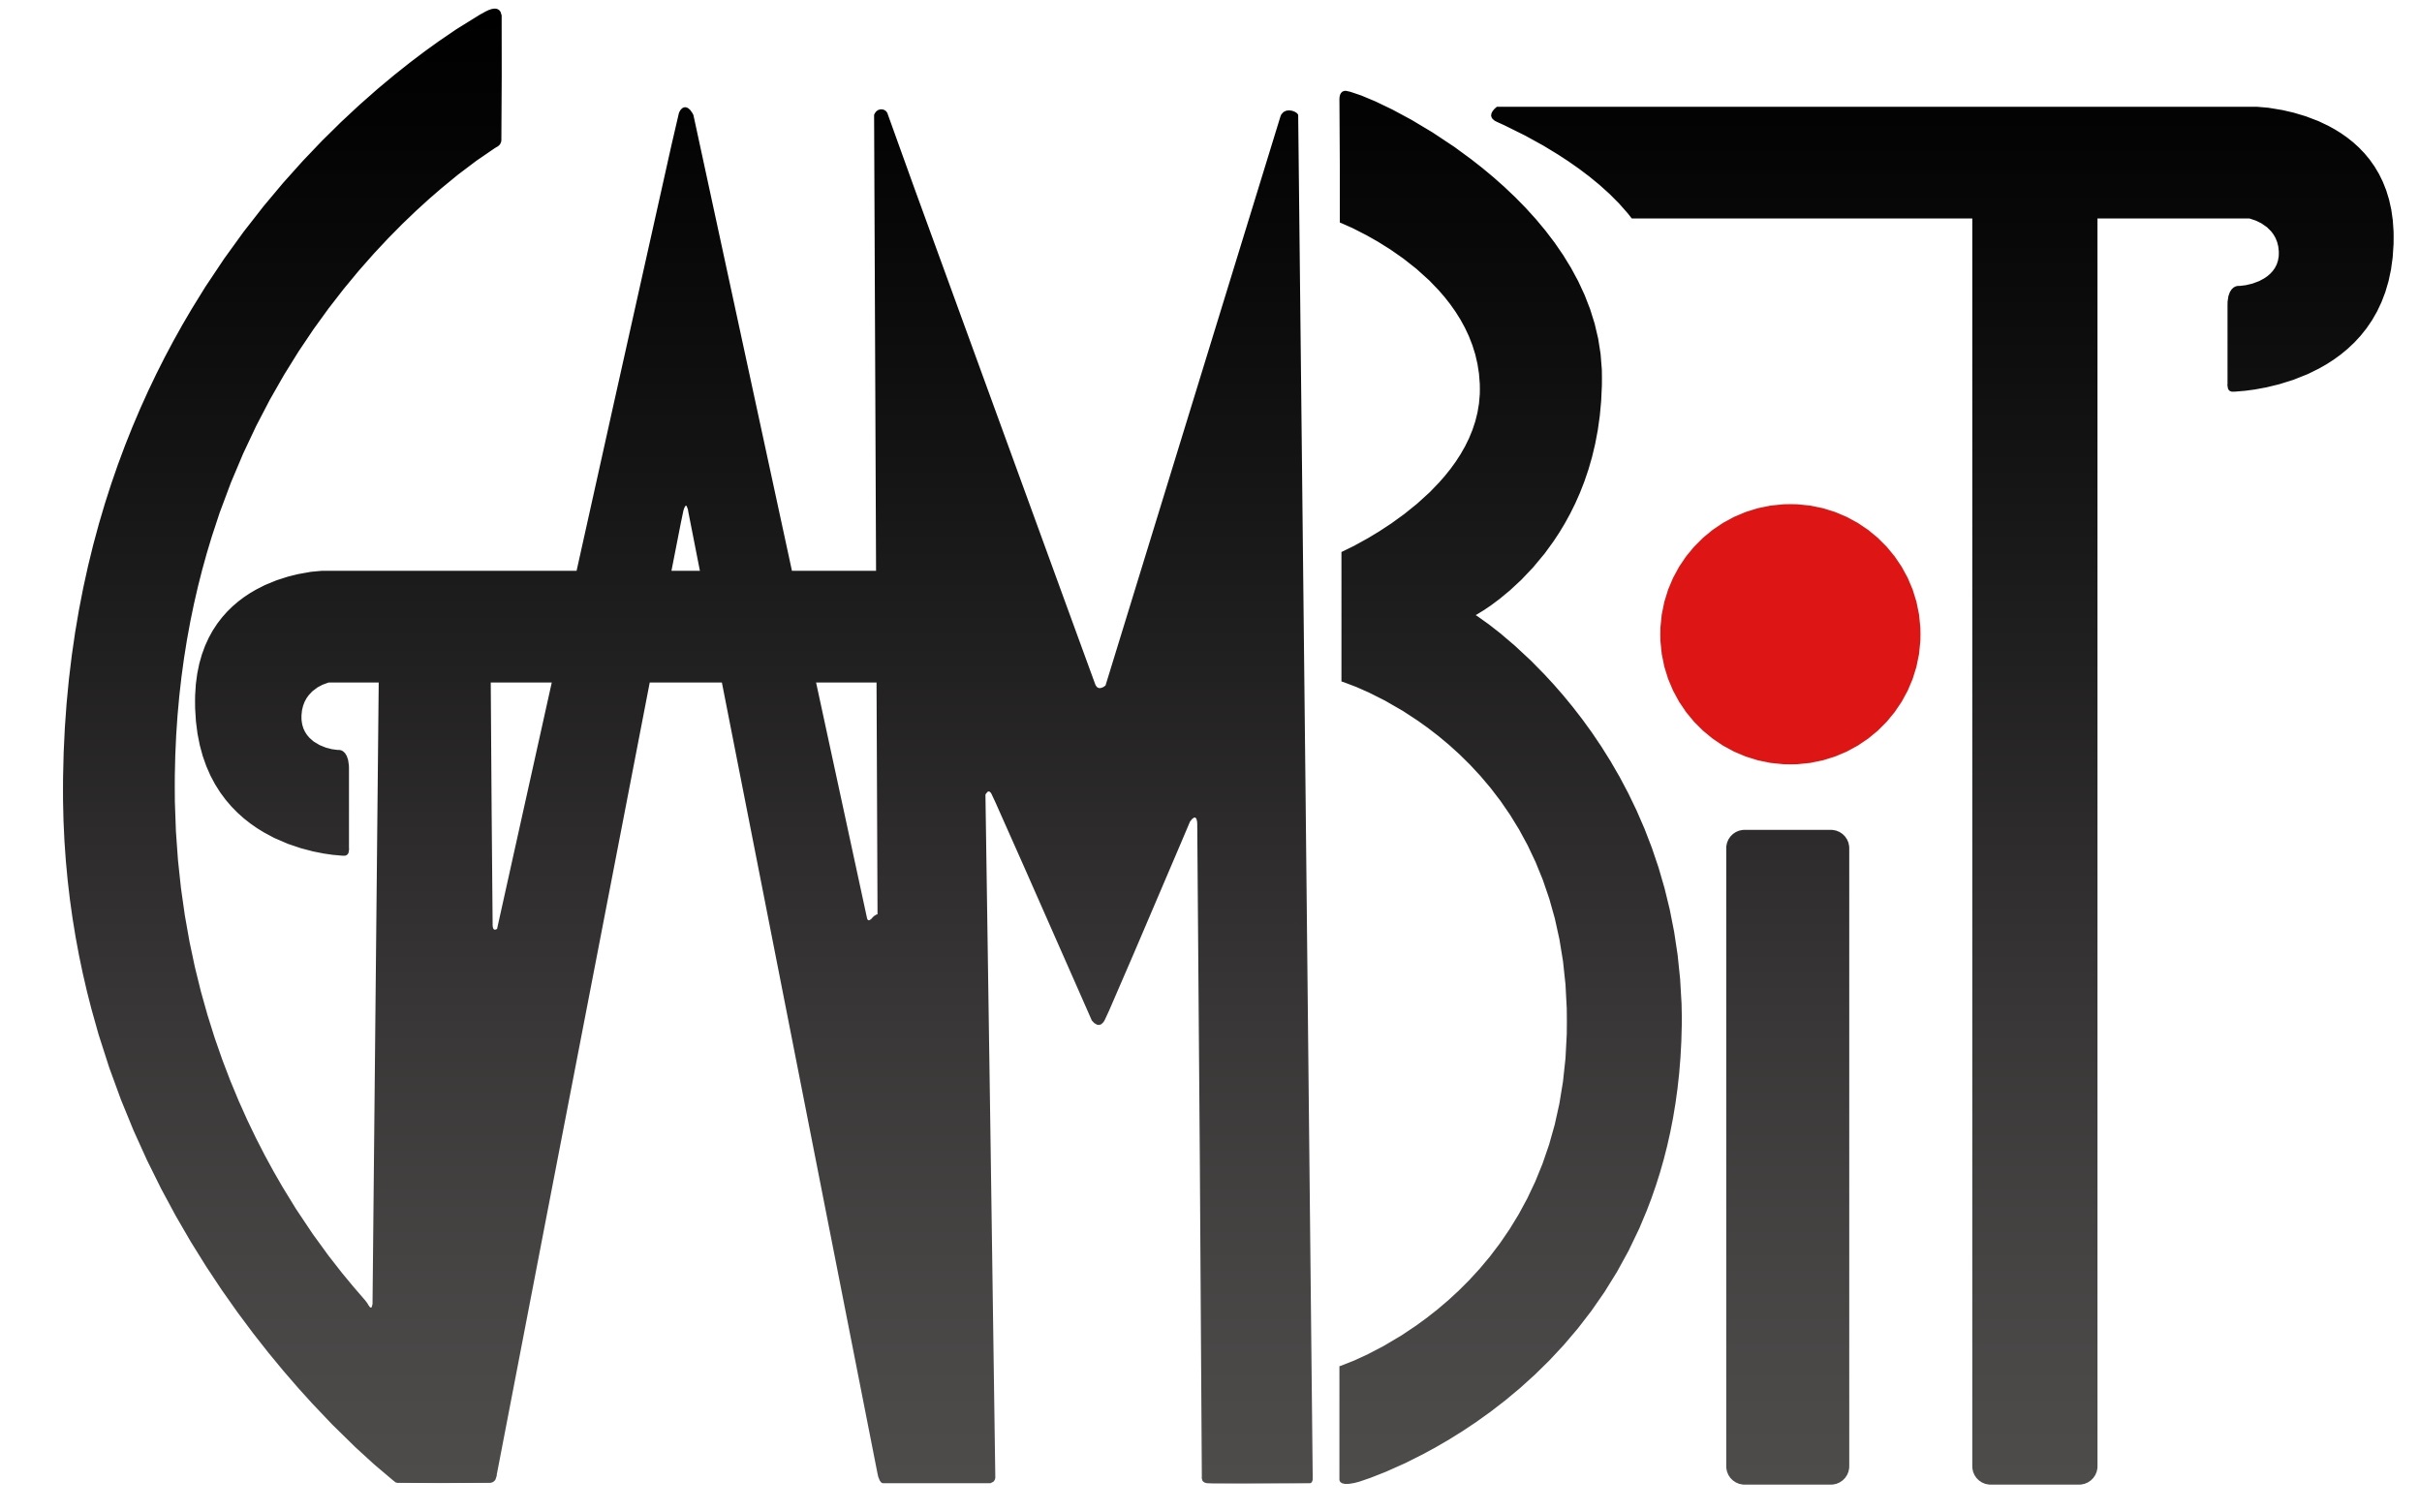 GAMBIT Logo.jpg 4e9a4302e53a75ddea358c45a27044ac